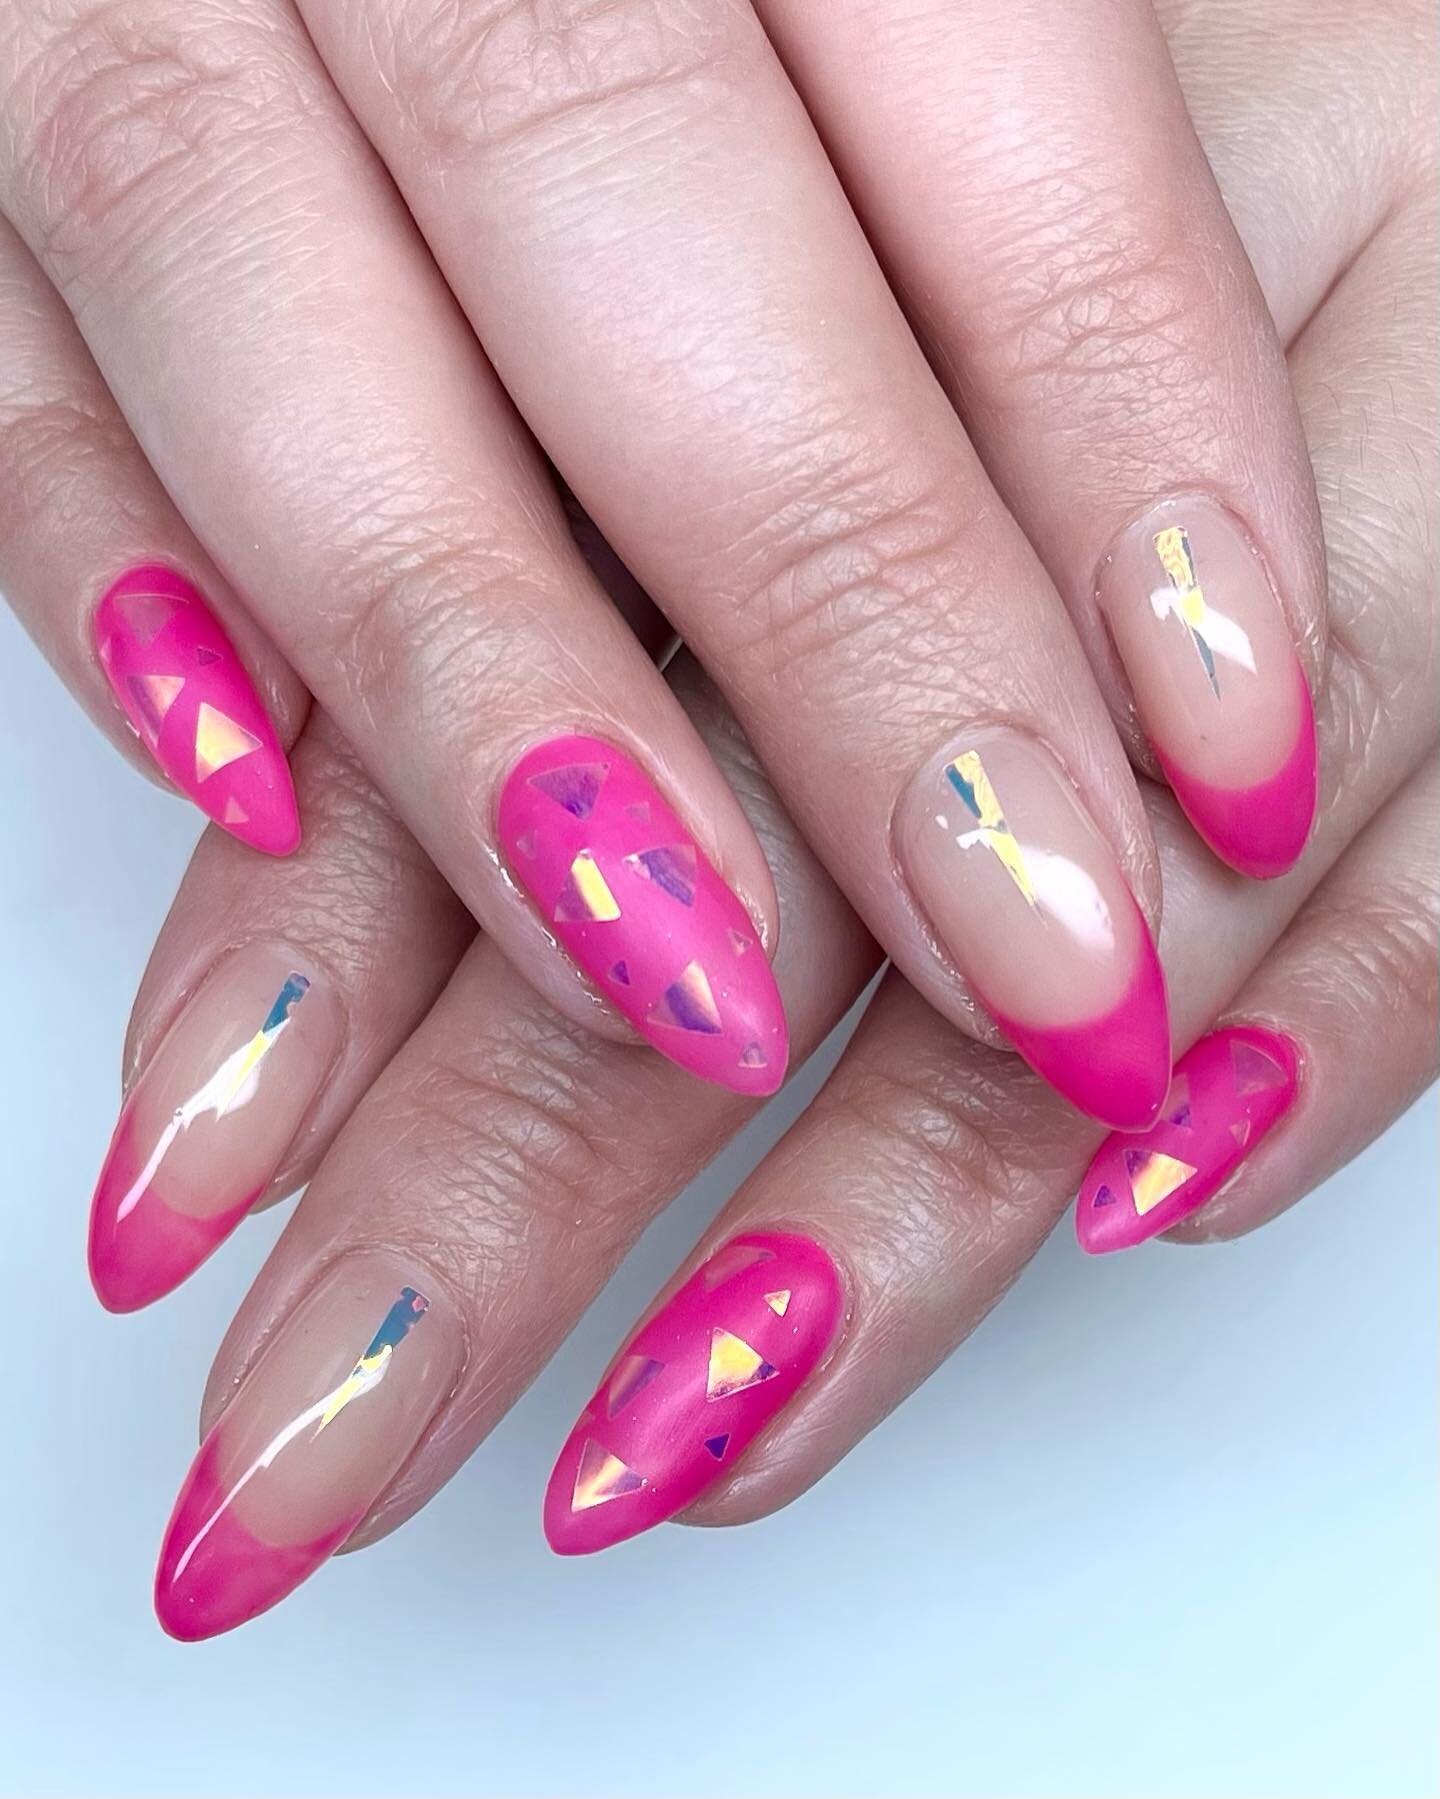 💕🌸💝🎀🦩💘
.
.
.
#nailart #pinknails #losangelesnails #lanailtech #nailsnailsnails